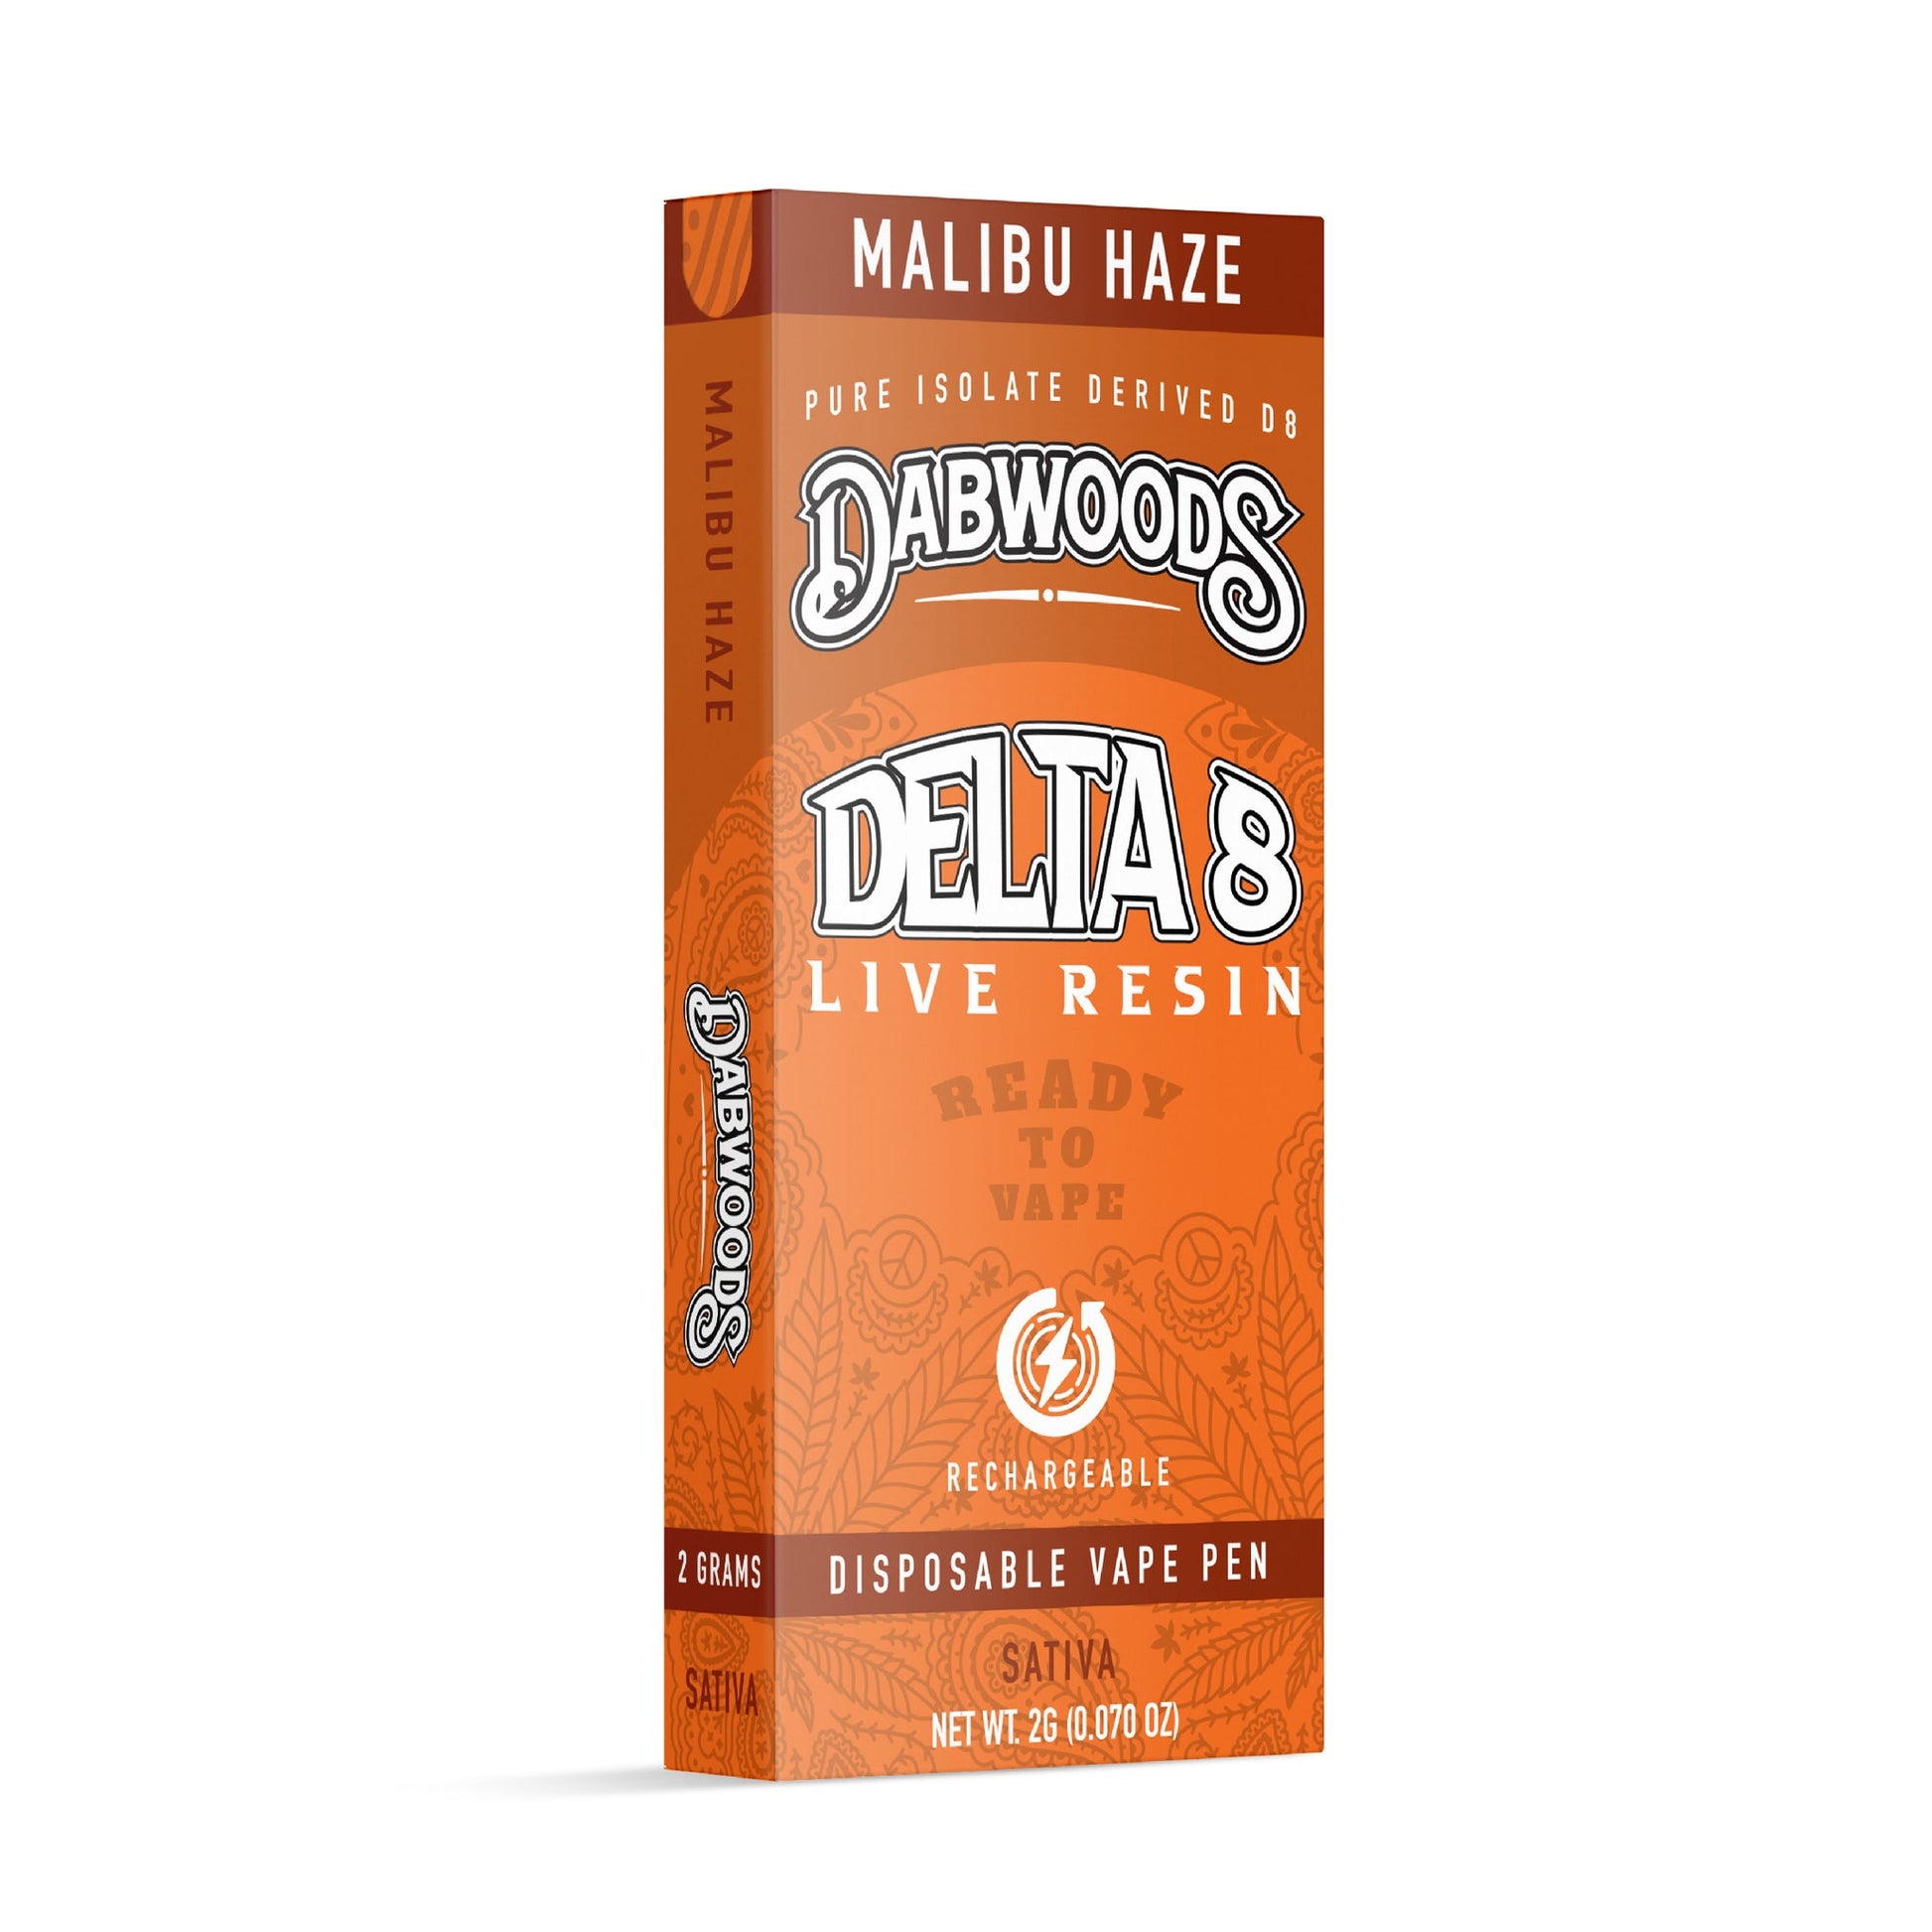 Dabwoods Disposable - Delta 8 2g - Malibu Haze (Sativa)